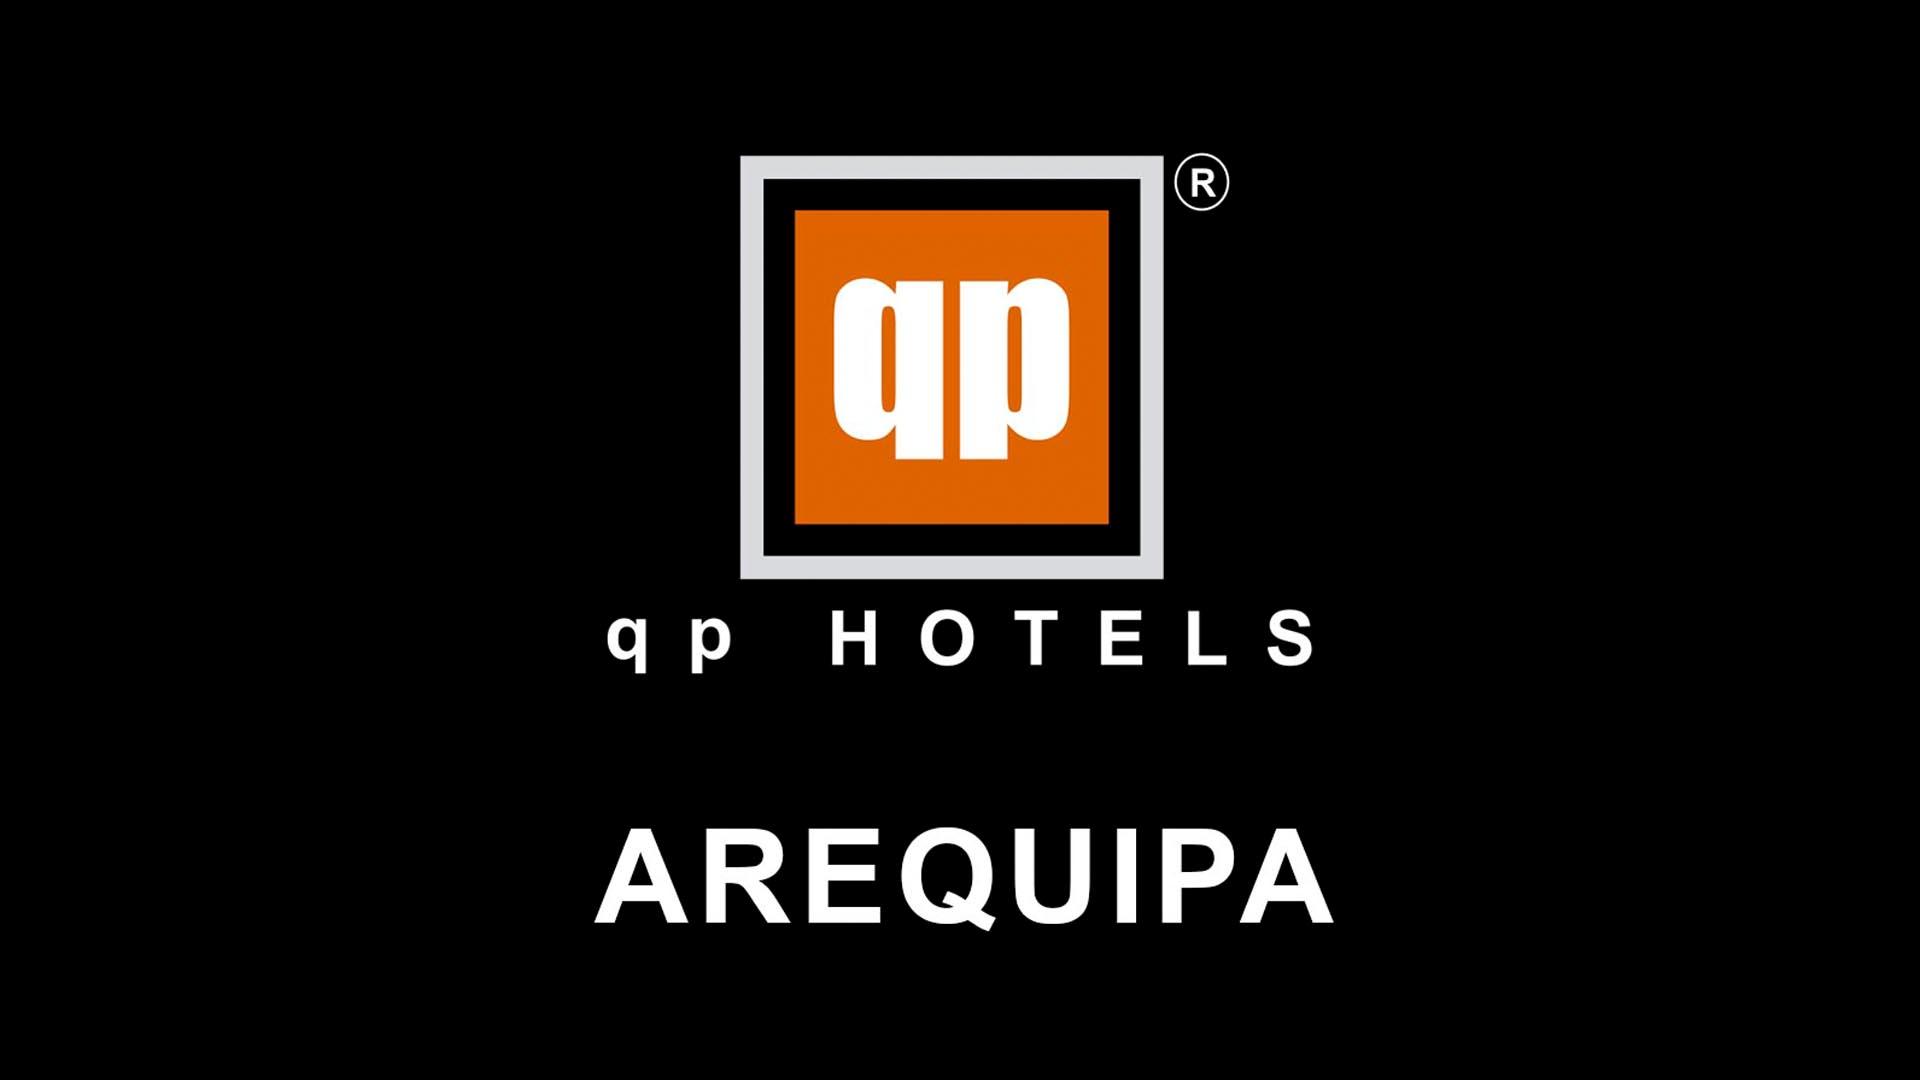 Variados (as) qp Hotels Arequipa